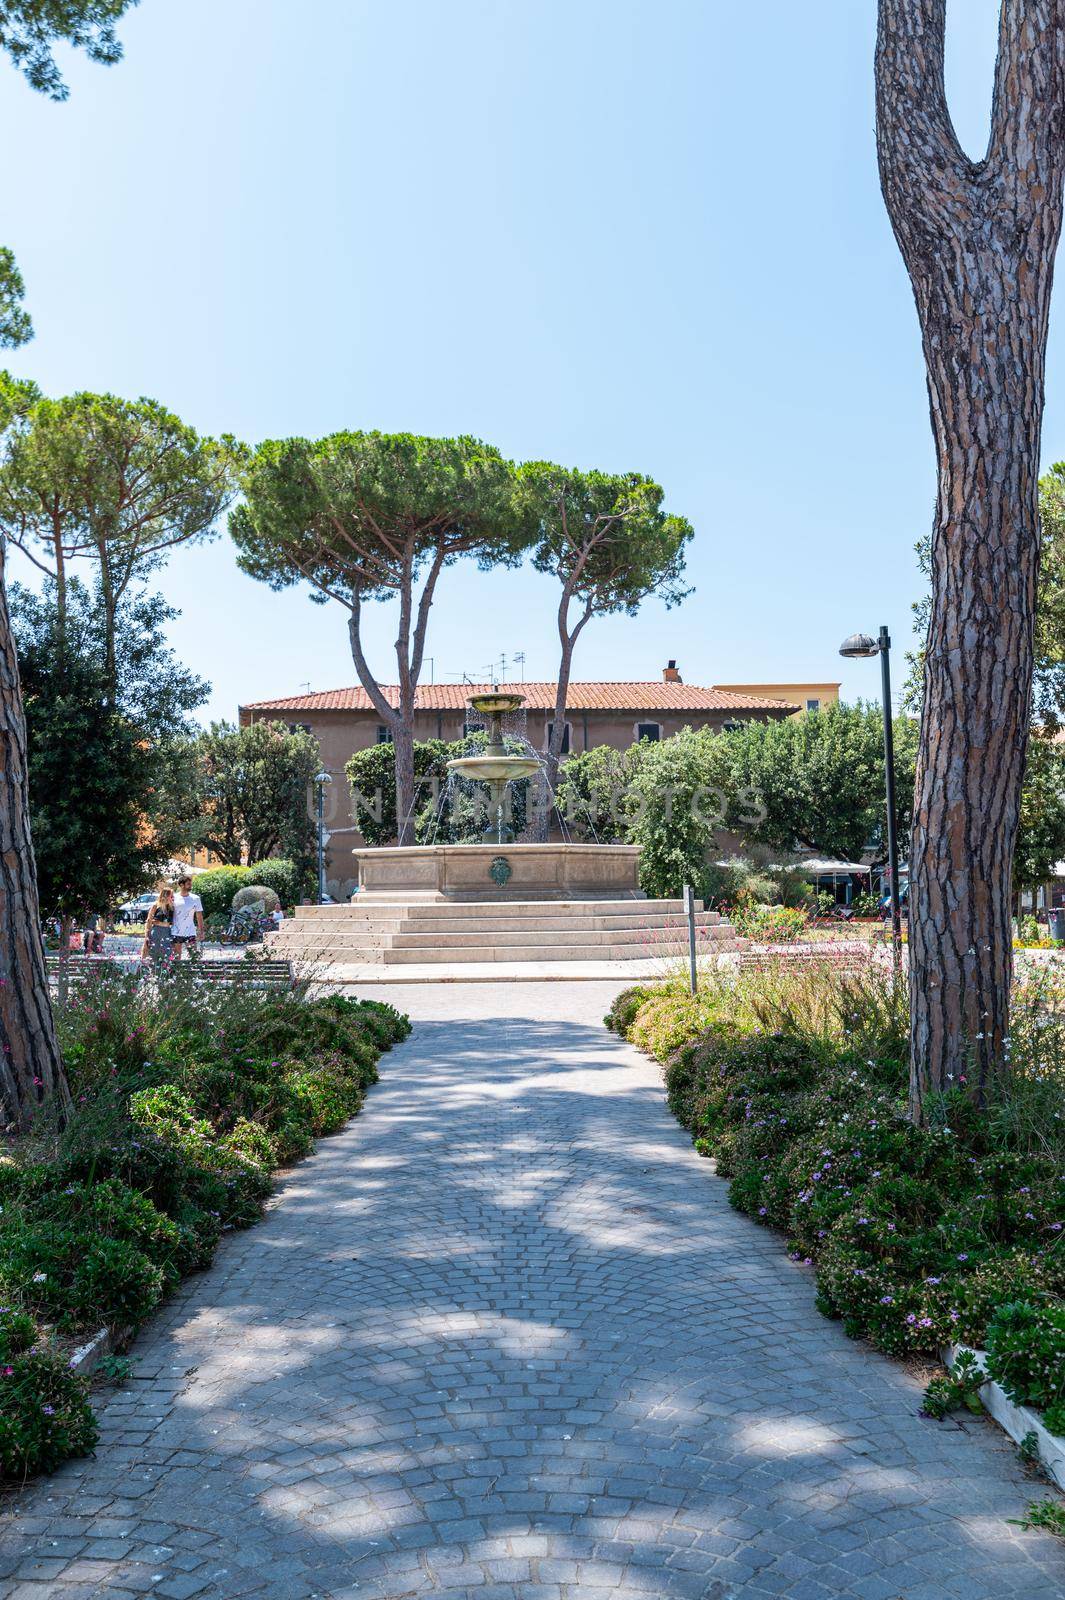 orbetello,italy july 24 2021:public gardens the fountain of orbetello